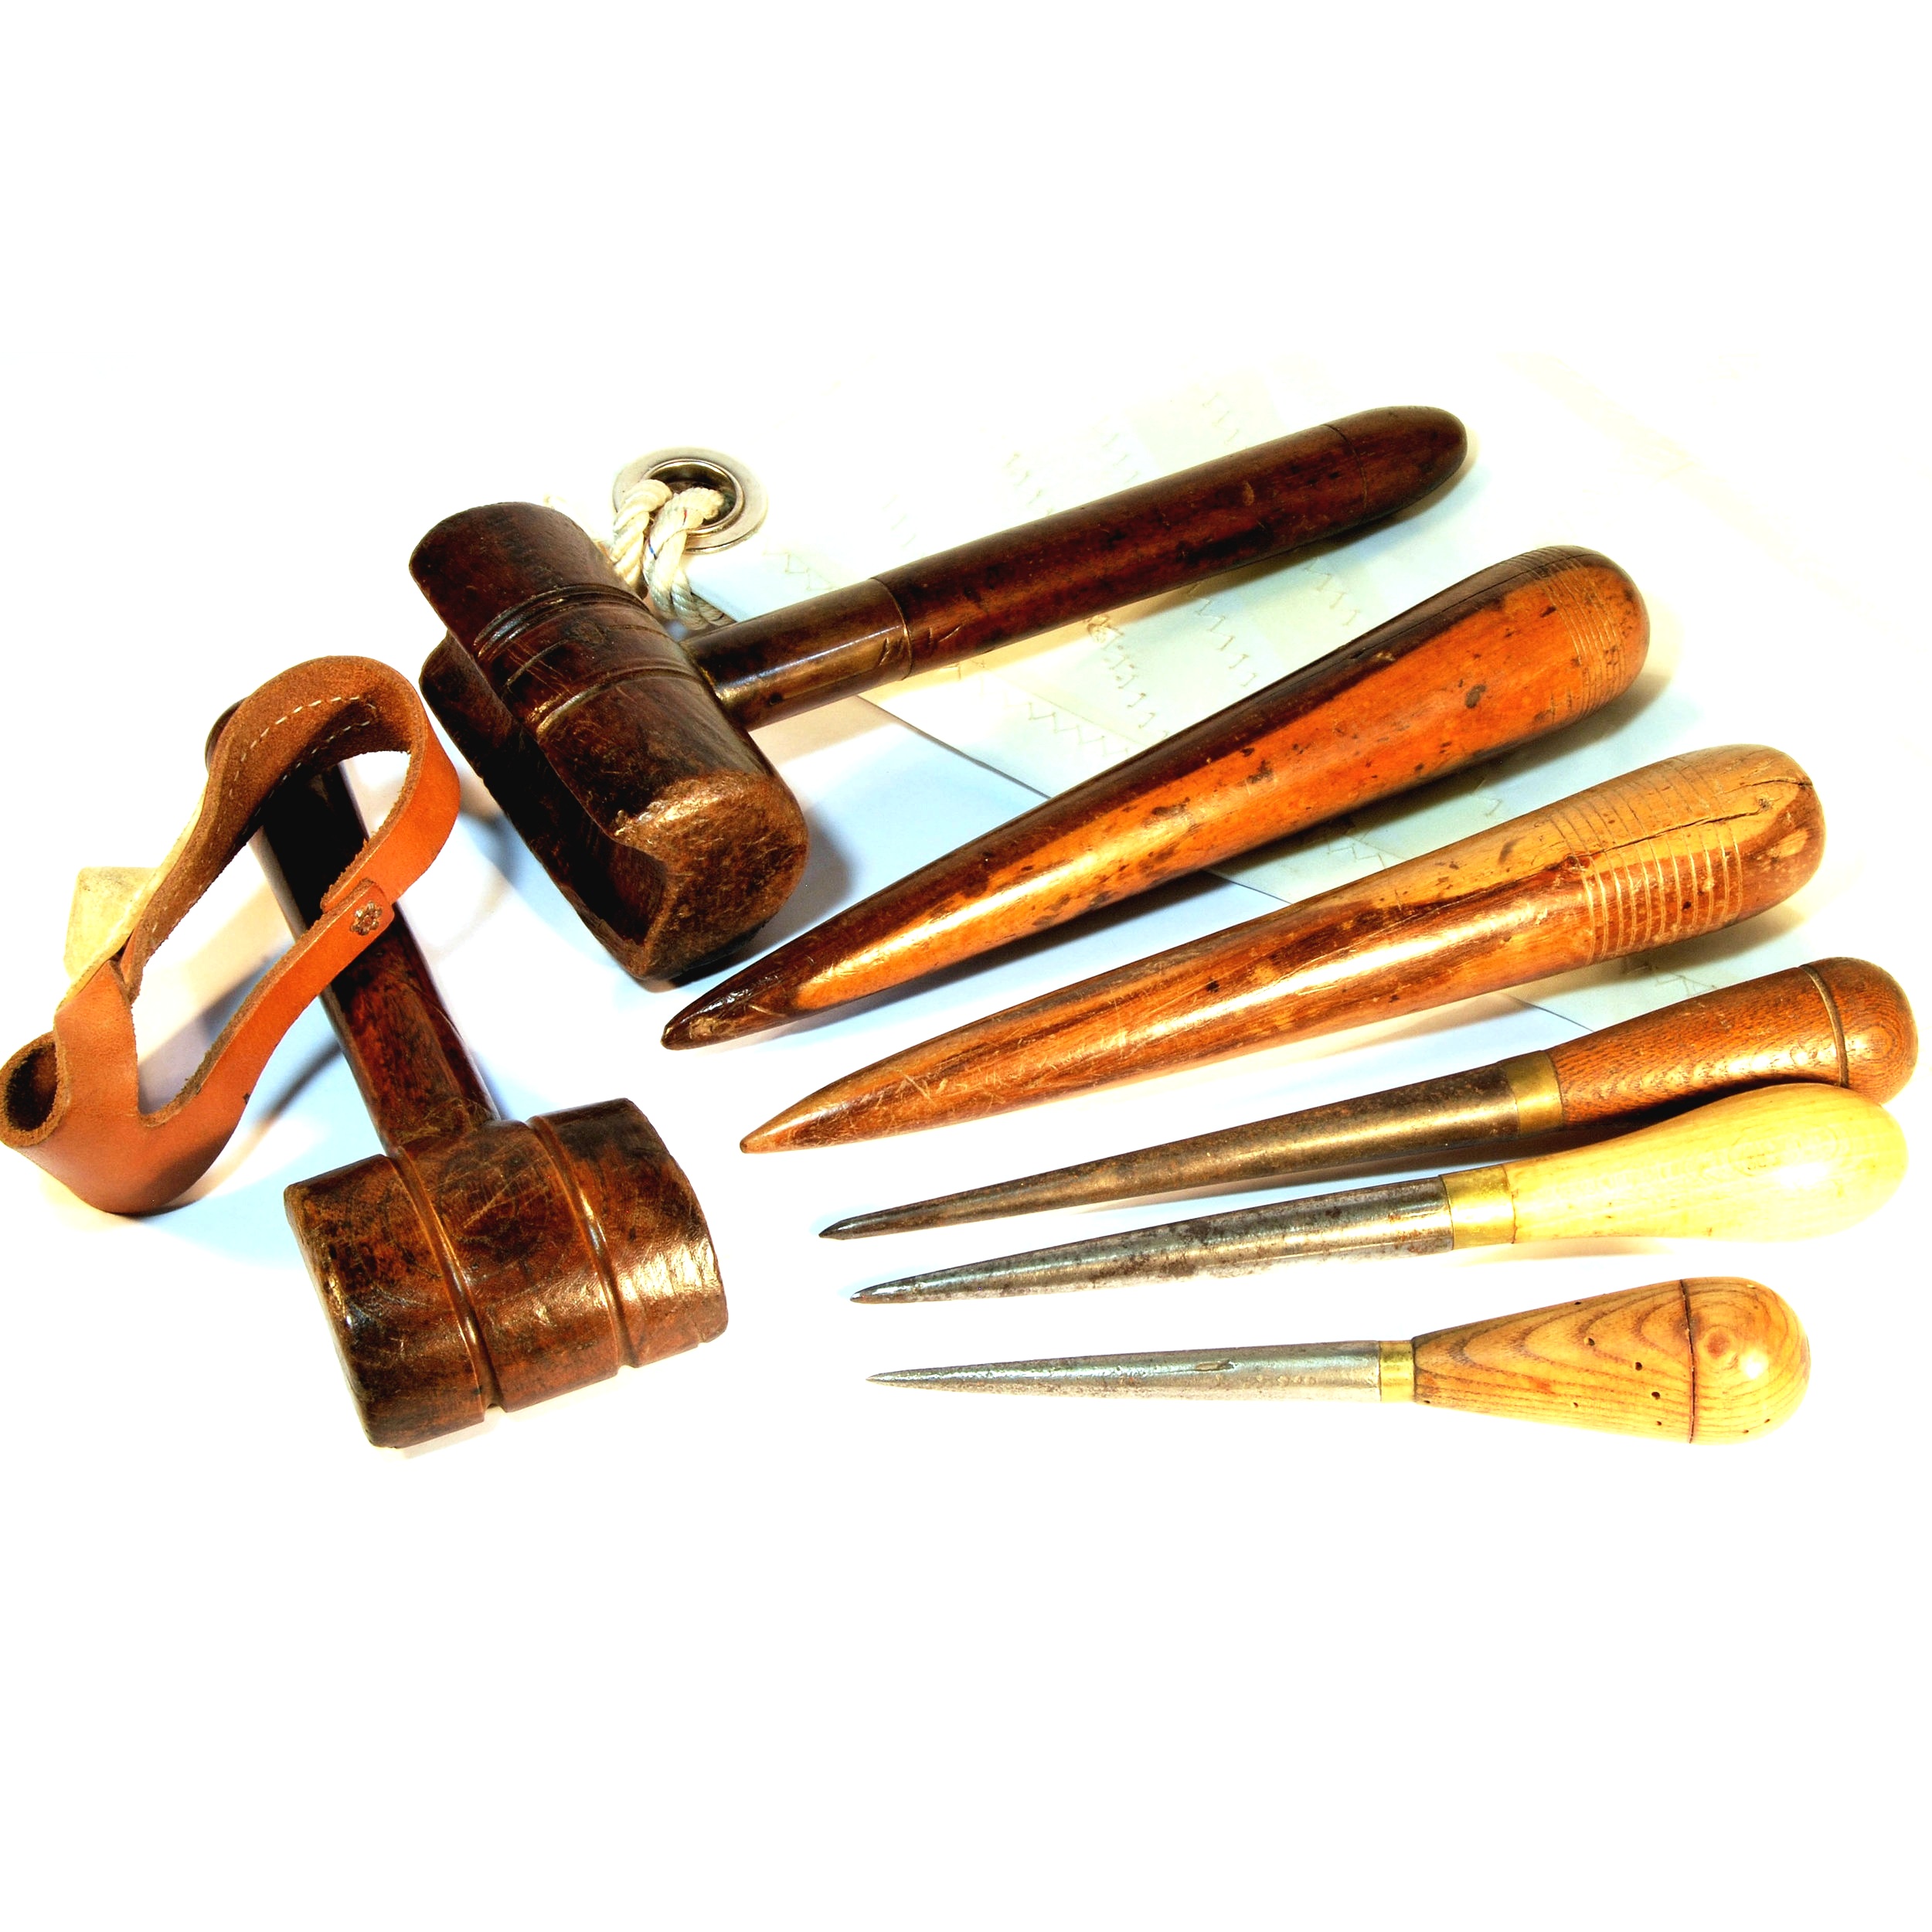 Sailmaker's tools